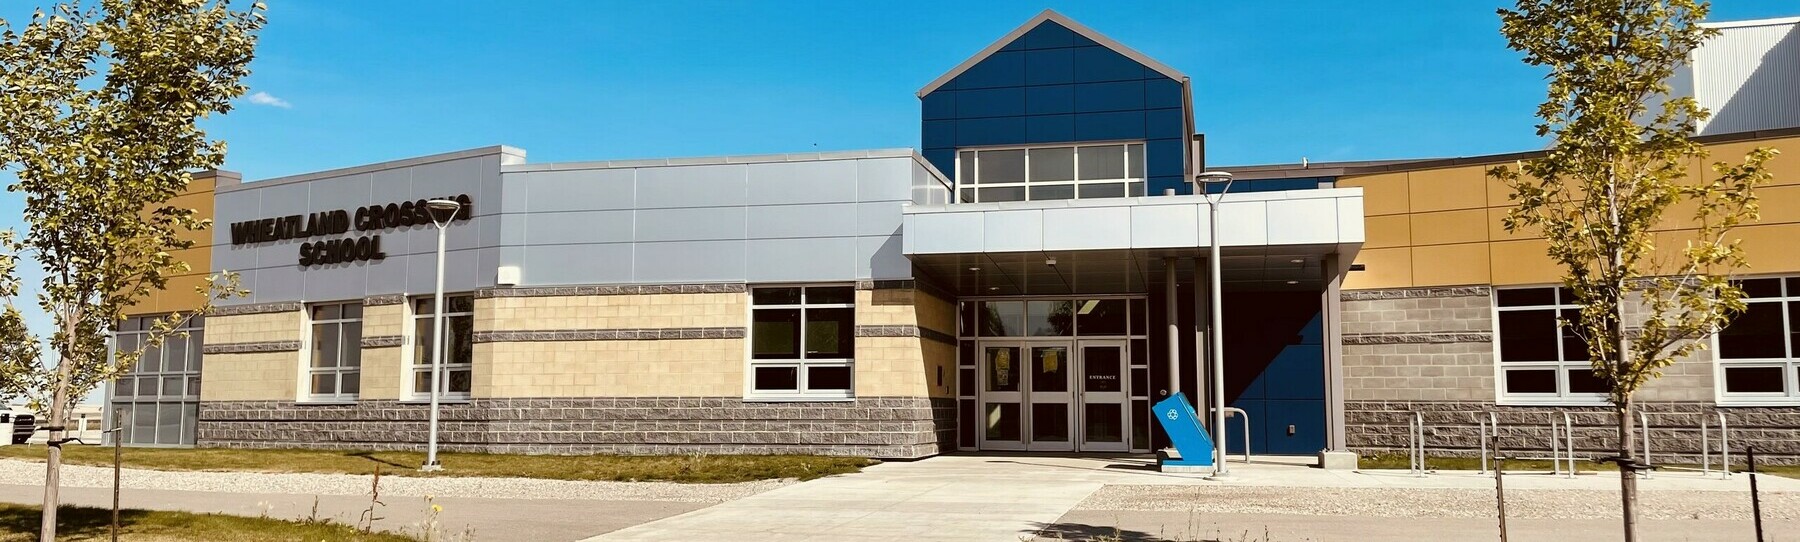 Entrance Image of Wheatland Crossing School